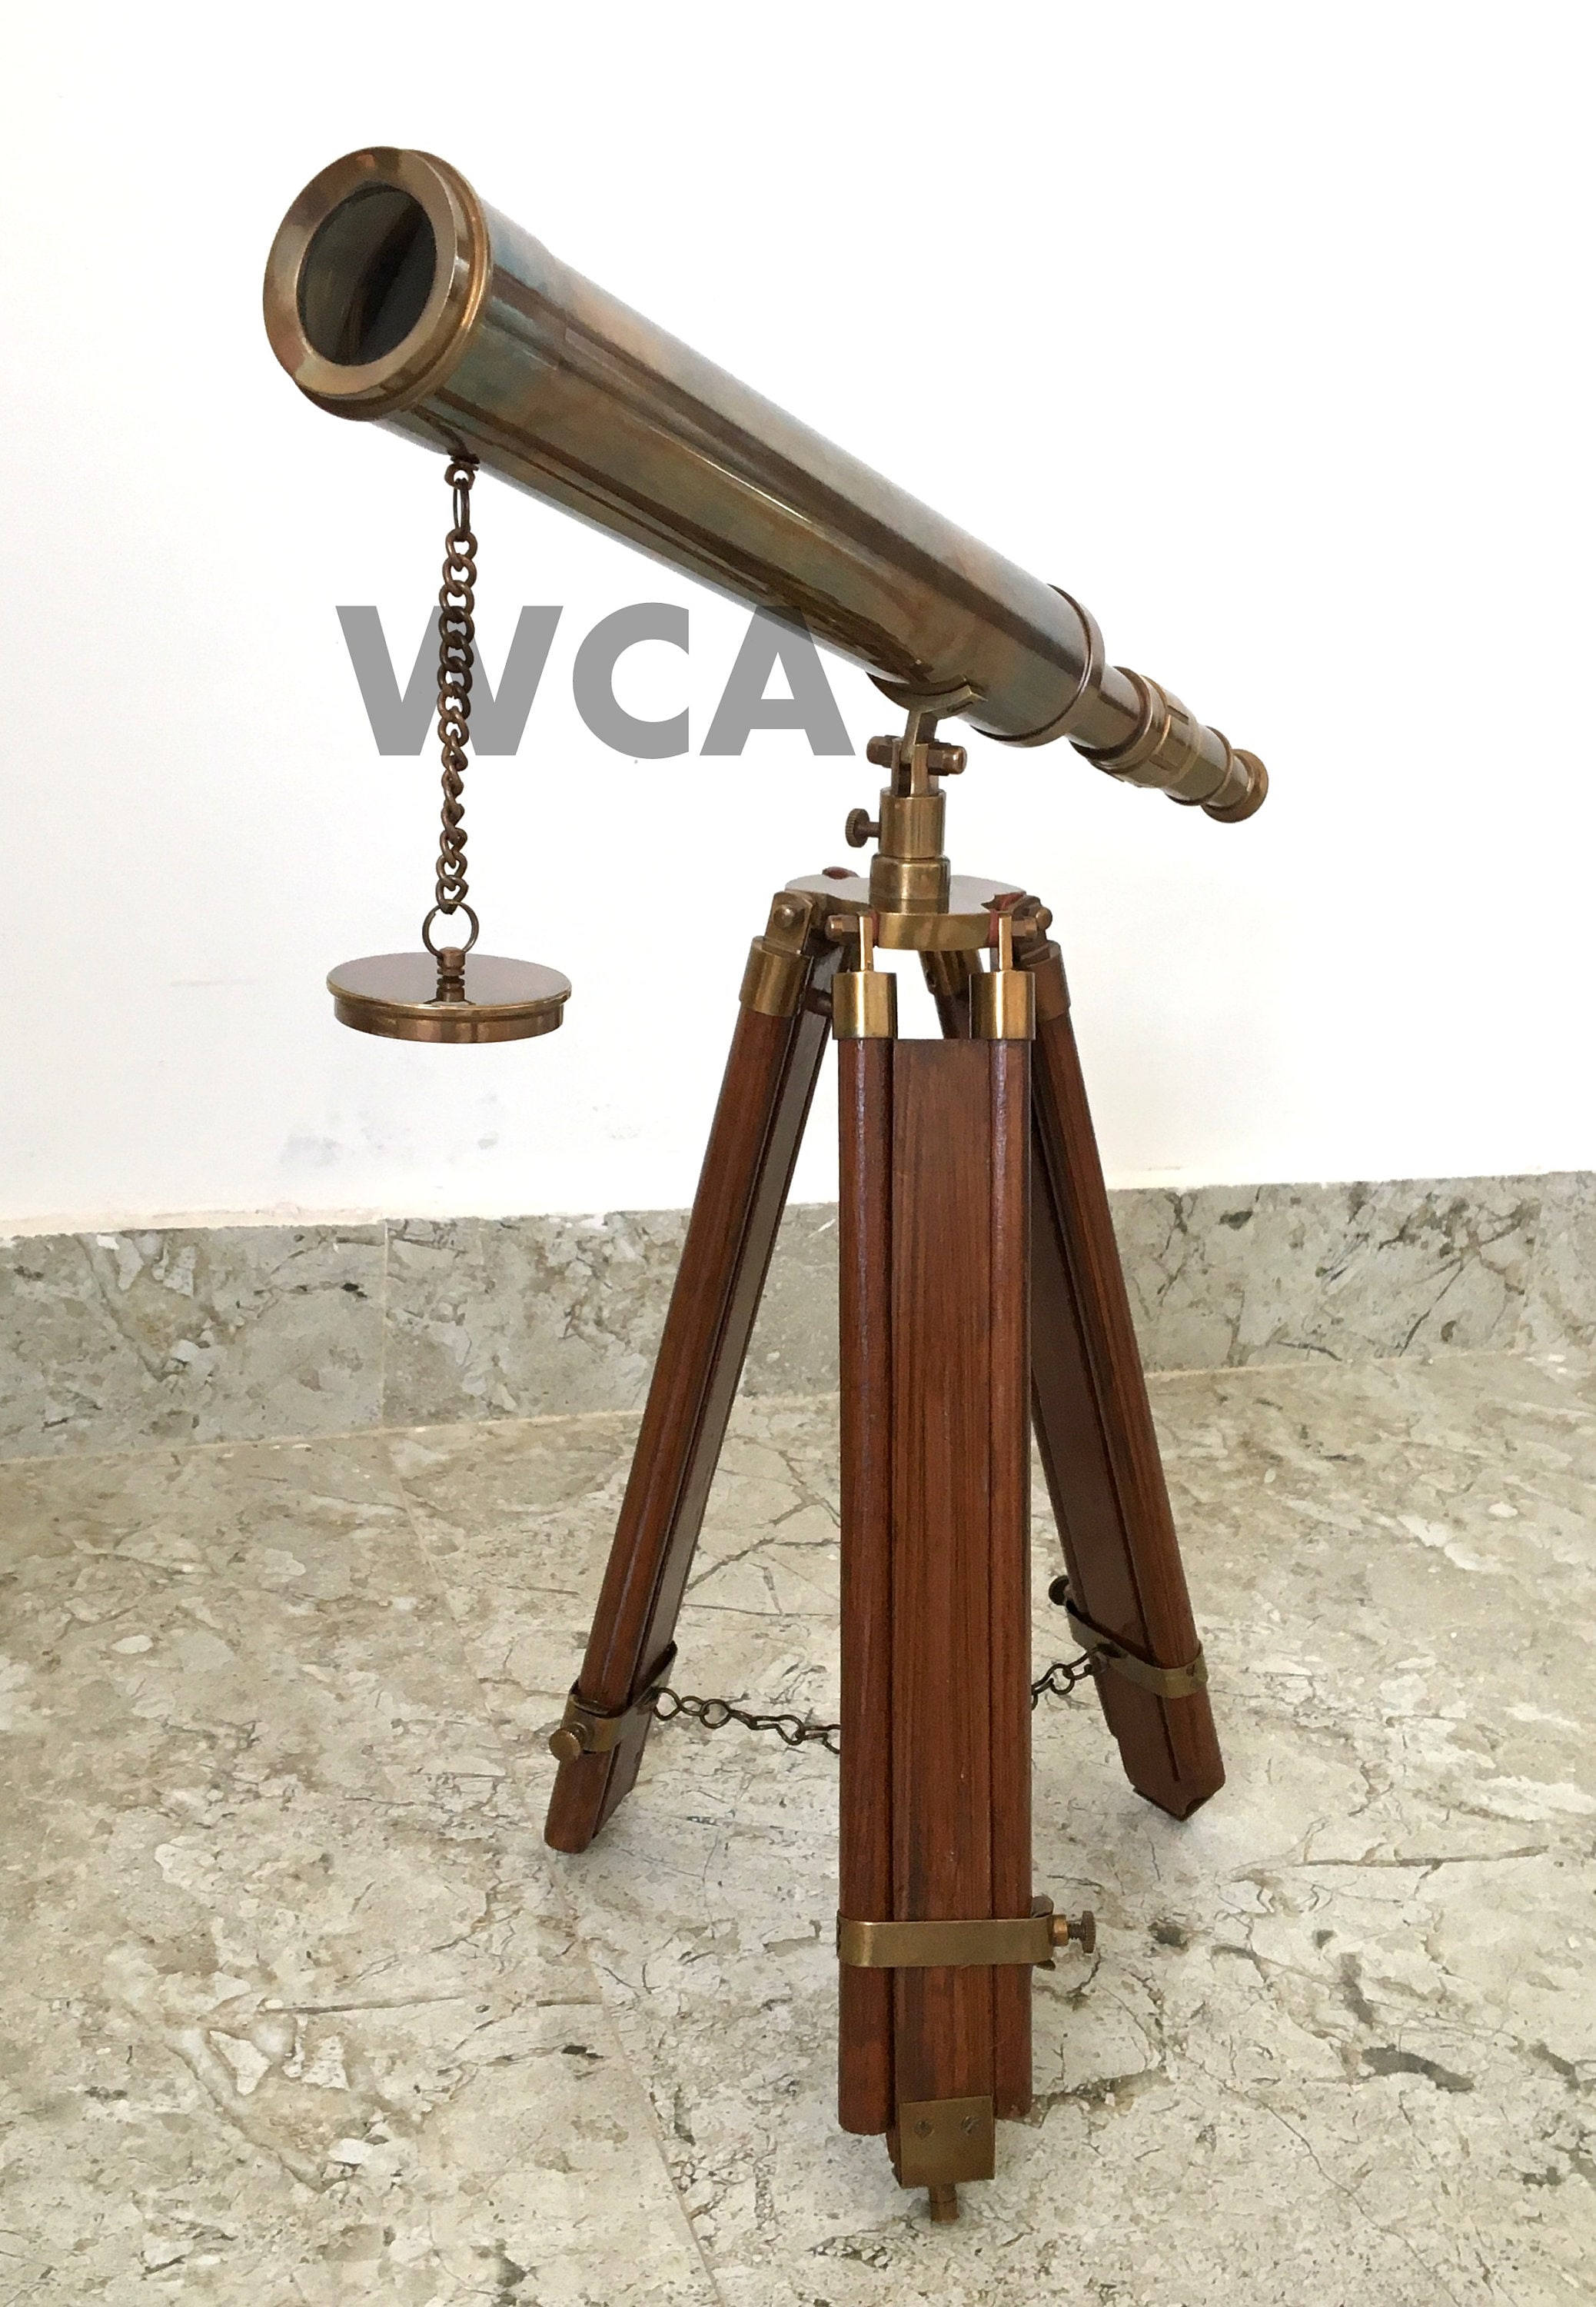 Details about   Antique Replica Style Decorative Brass Spyglass Telescope Maritime Working Item 